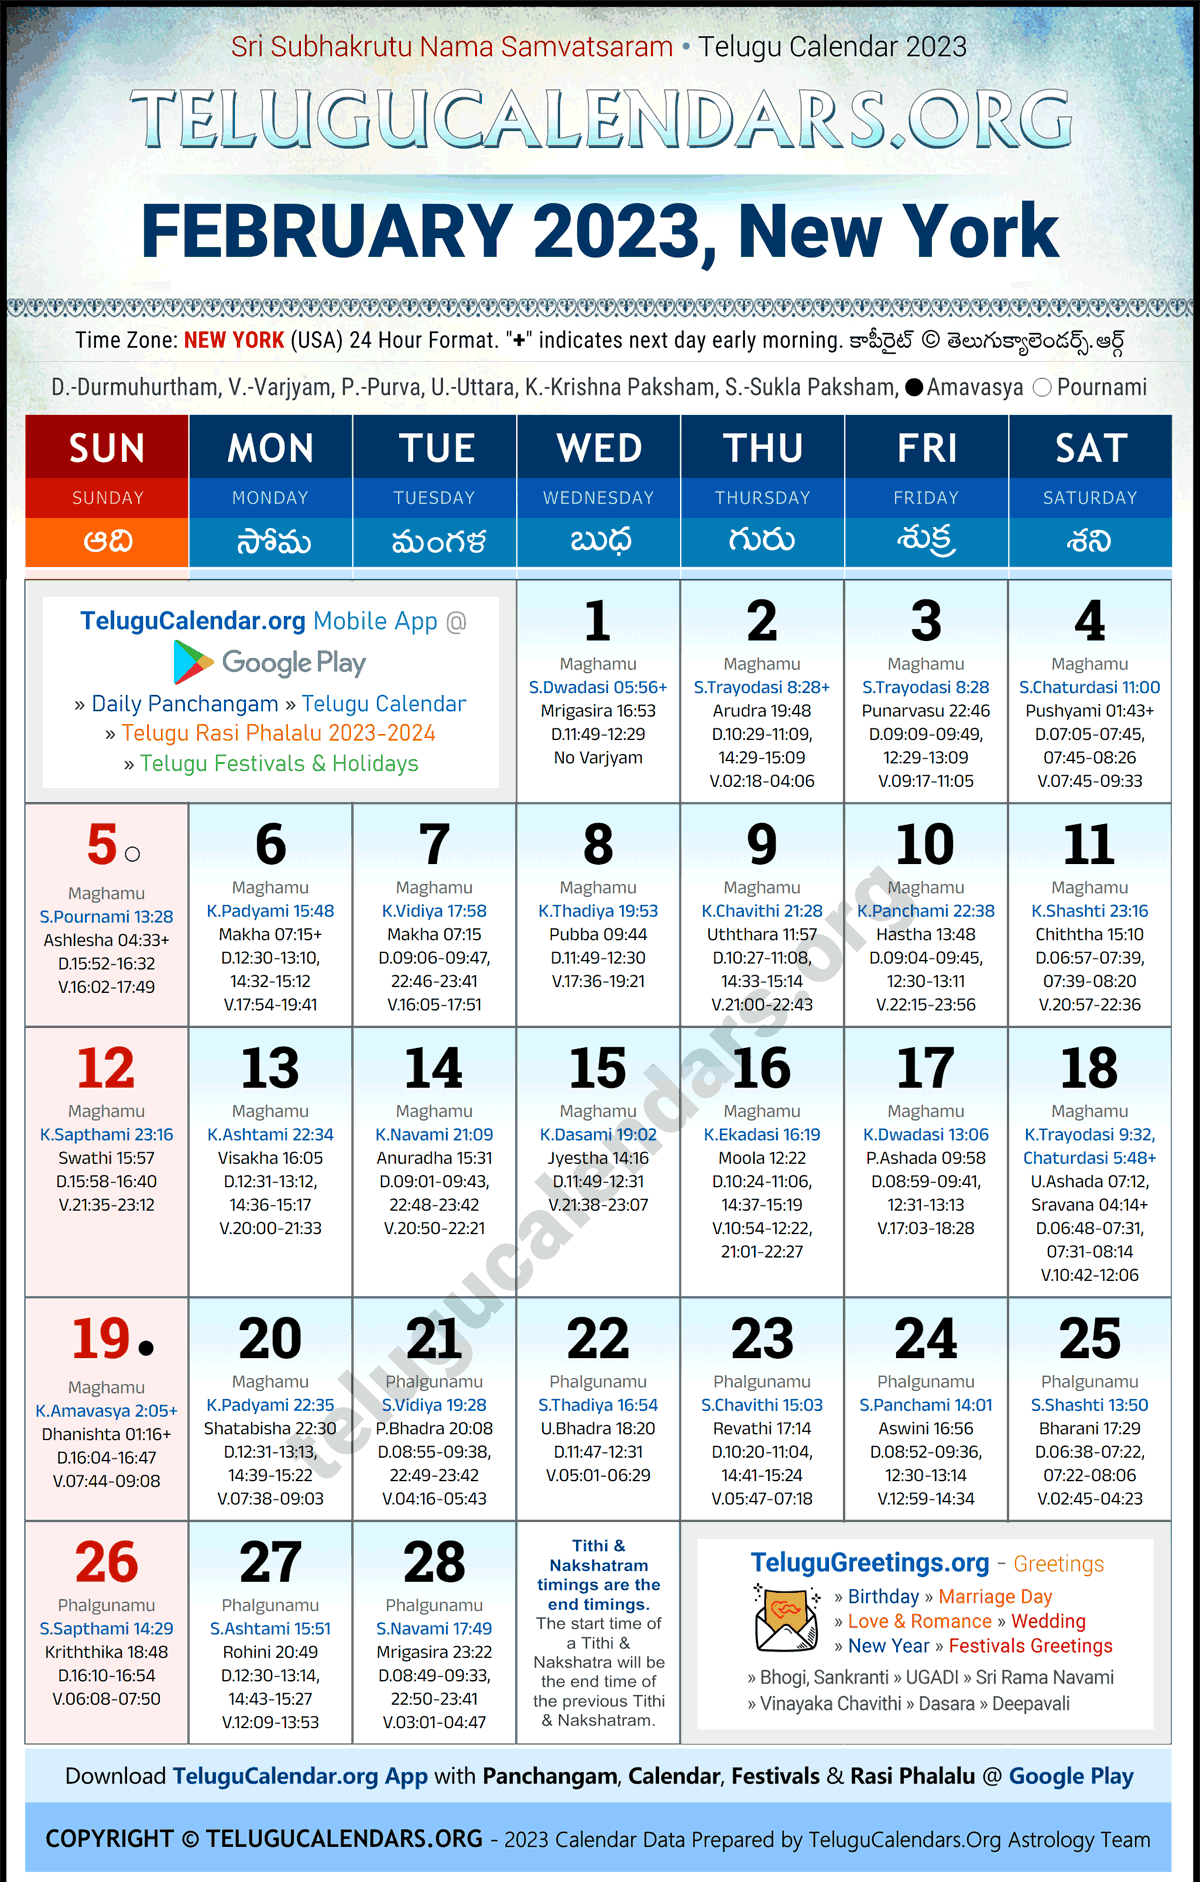 Telugu Calendar 2023 February Festivals for New York